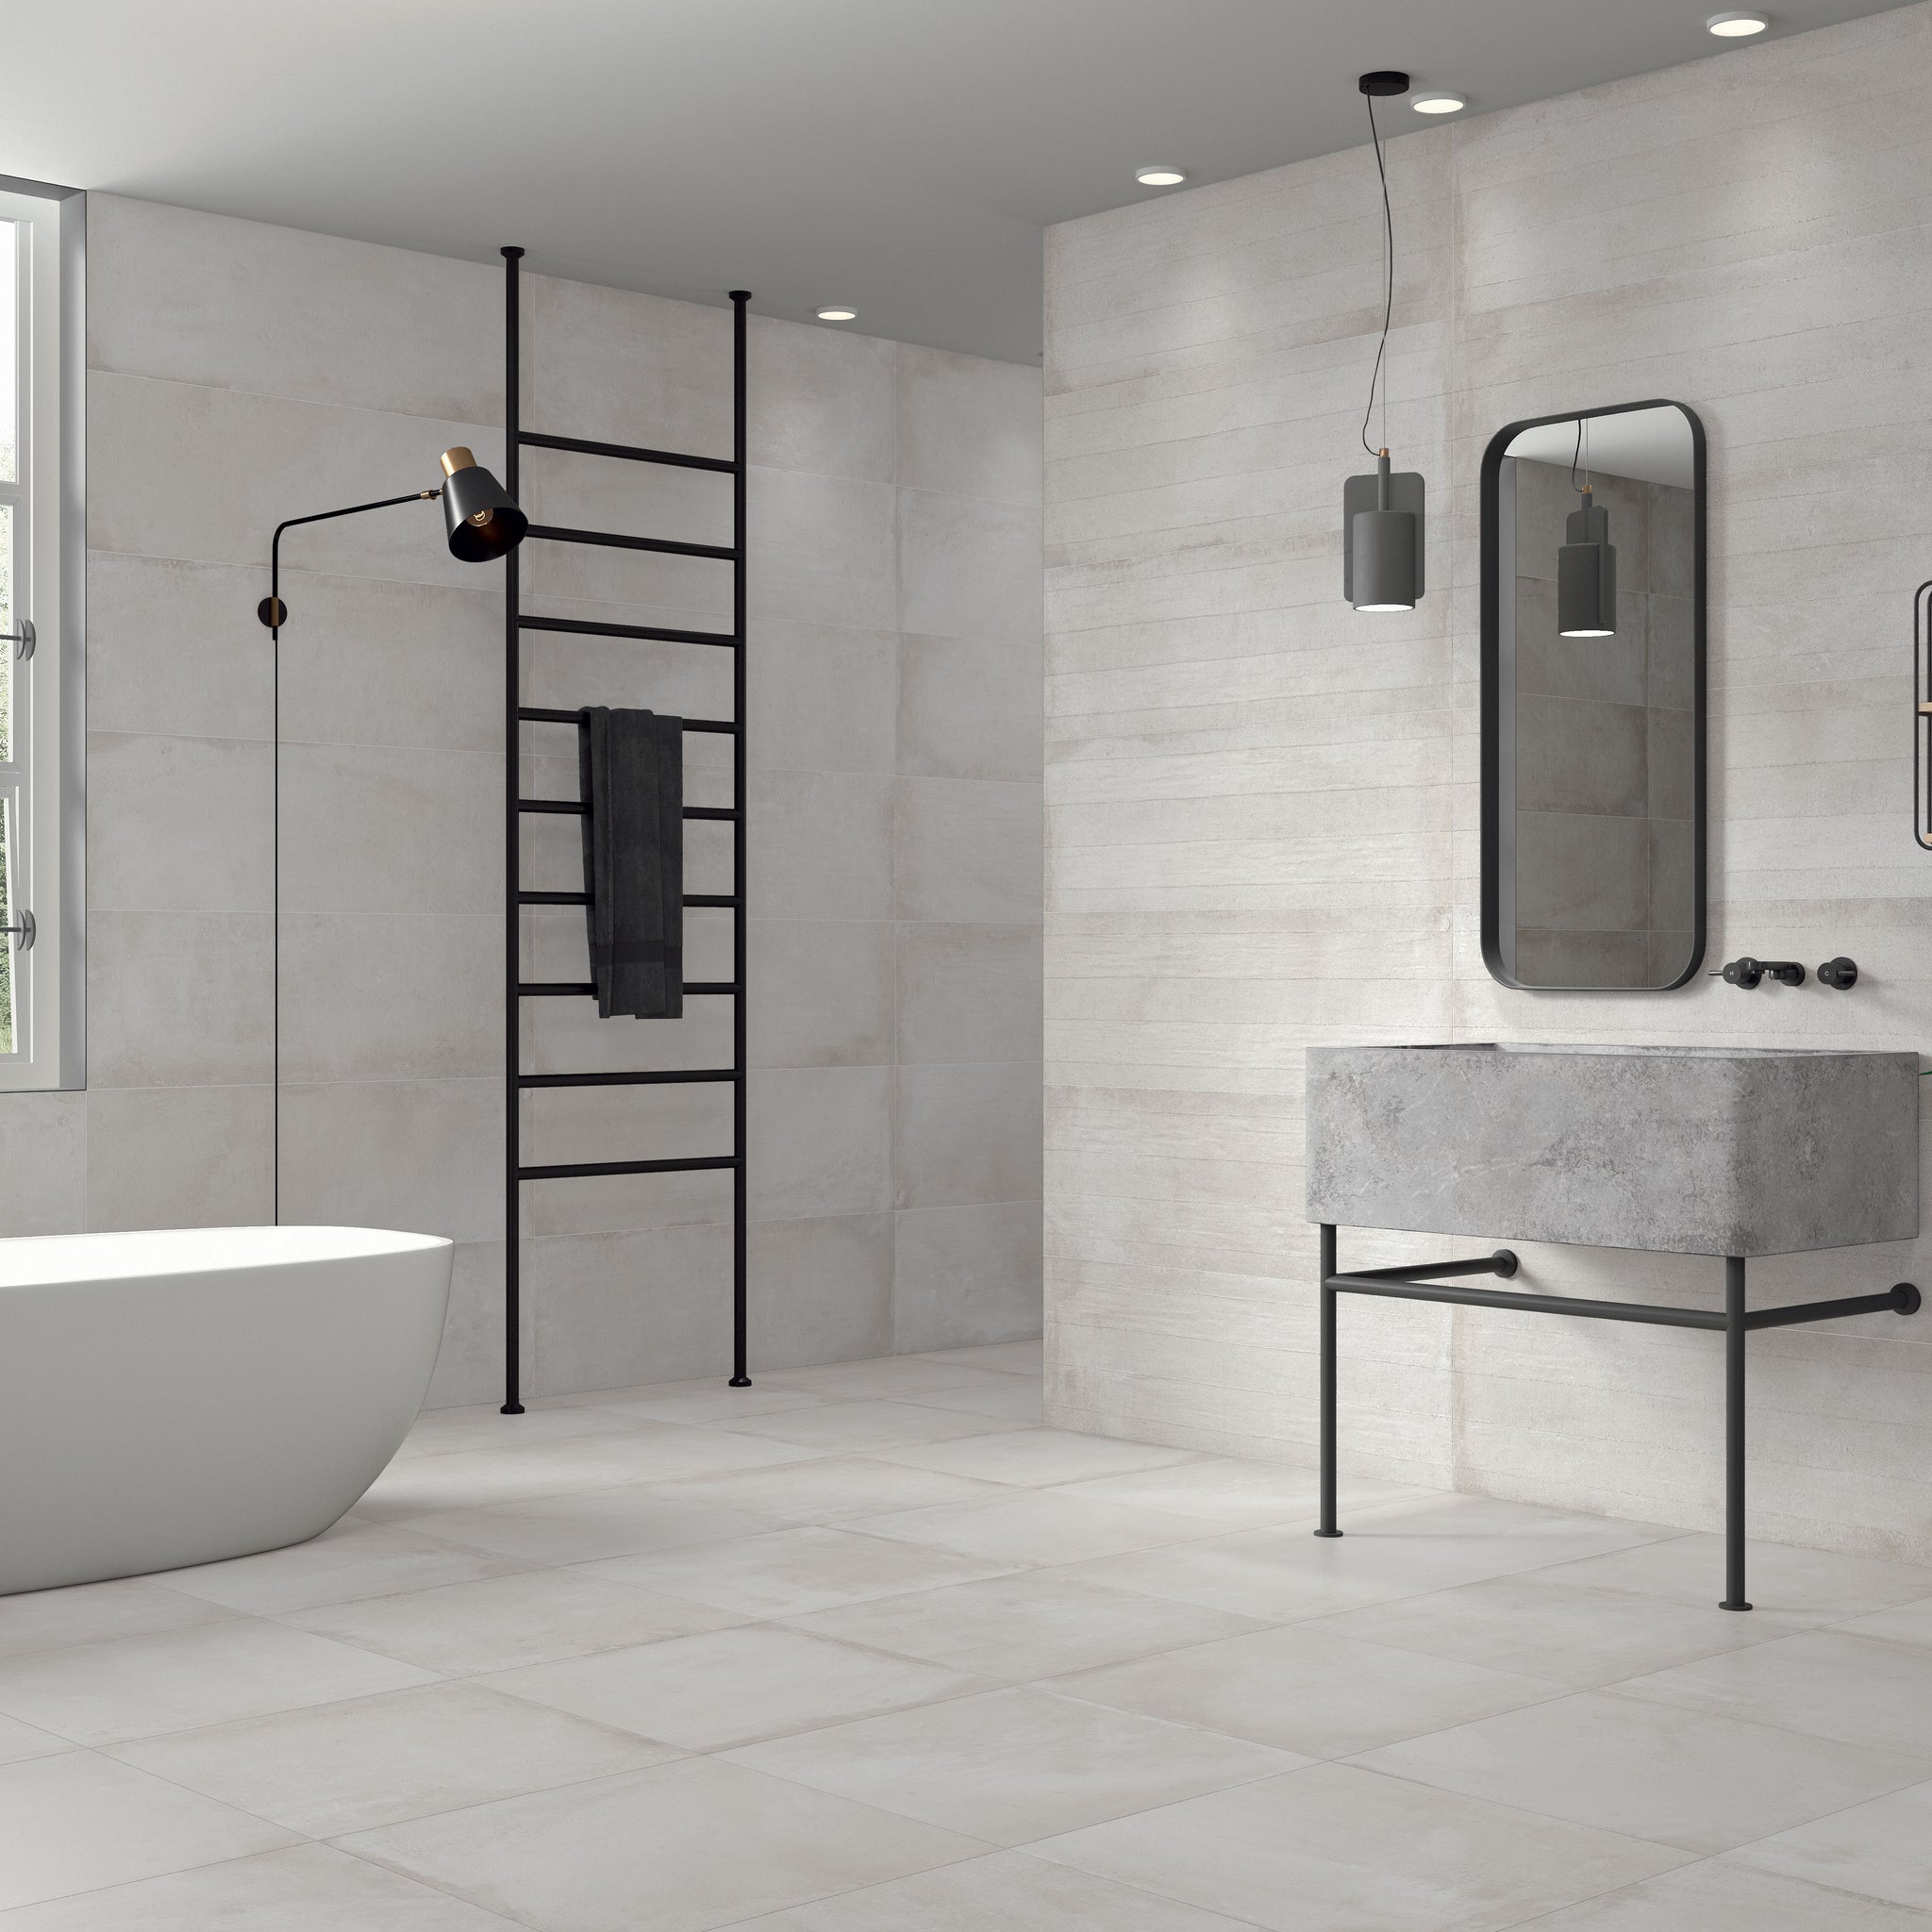 Stoneage Salle de bain Blanc / Stoneage Bathroom White